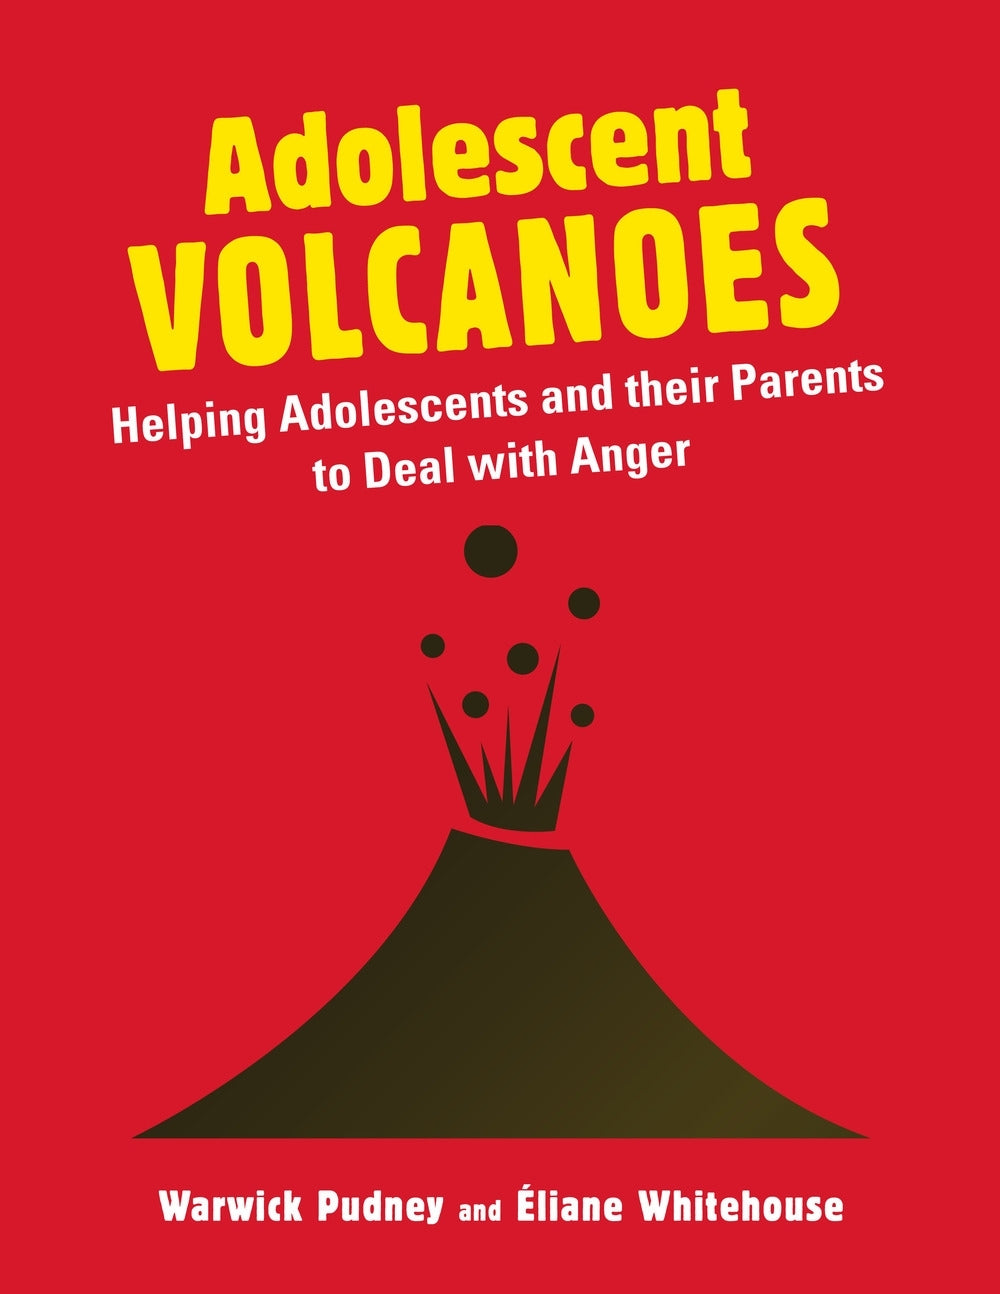 Adolescent Volcanoes by Warwick Pudney, Max Abbott